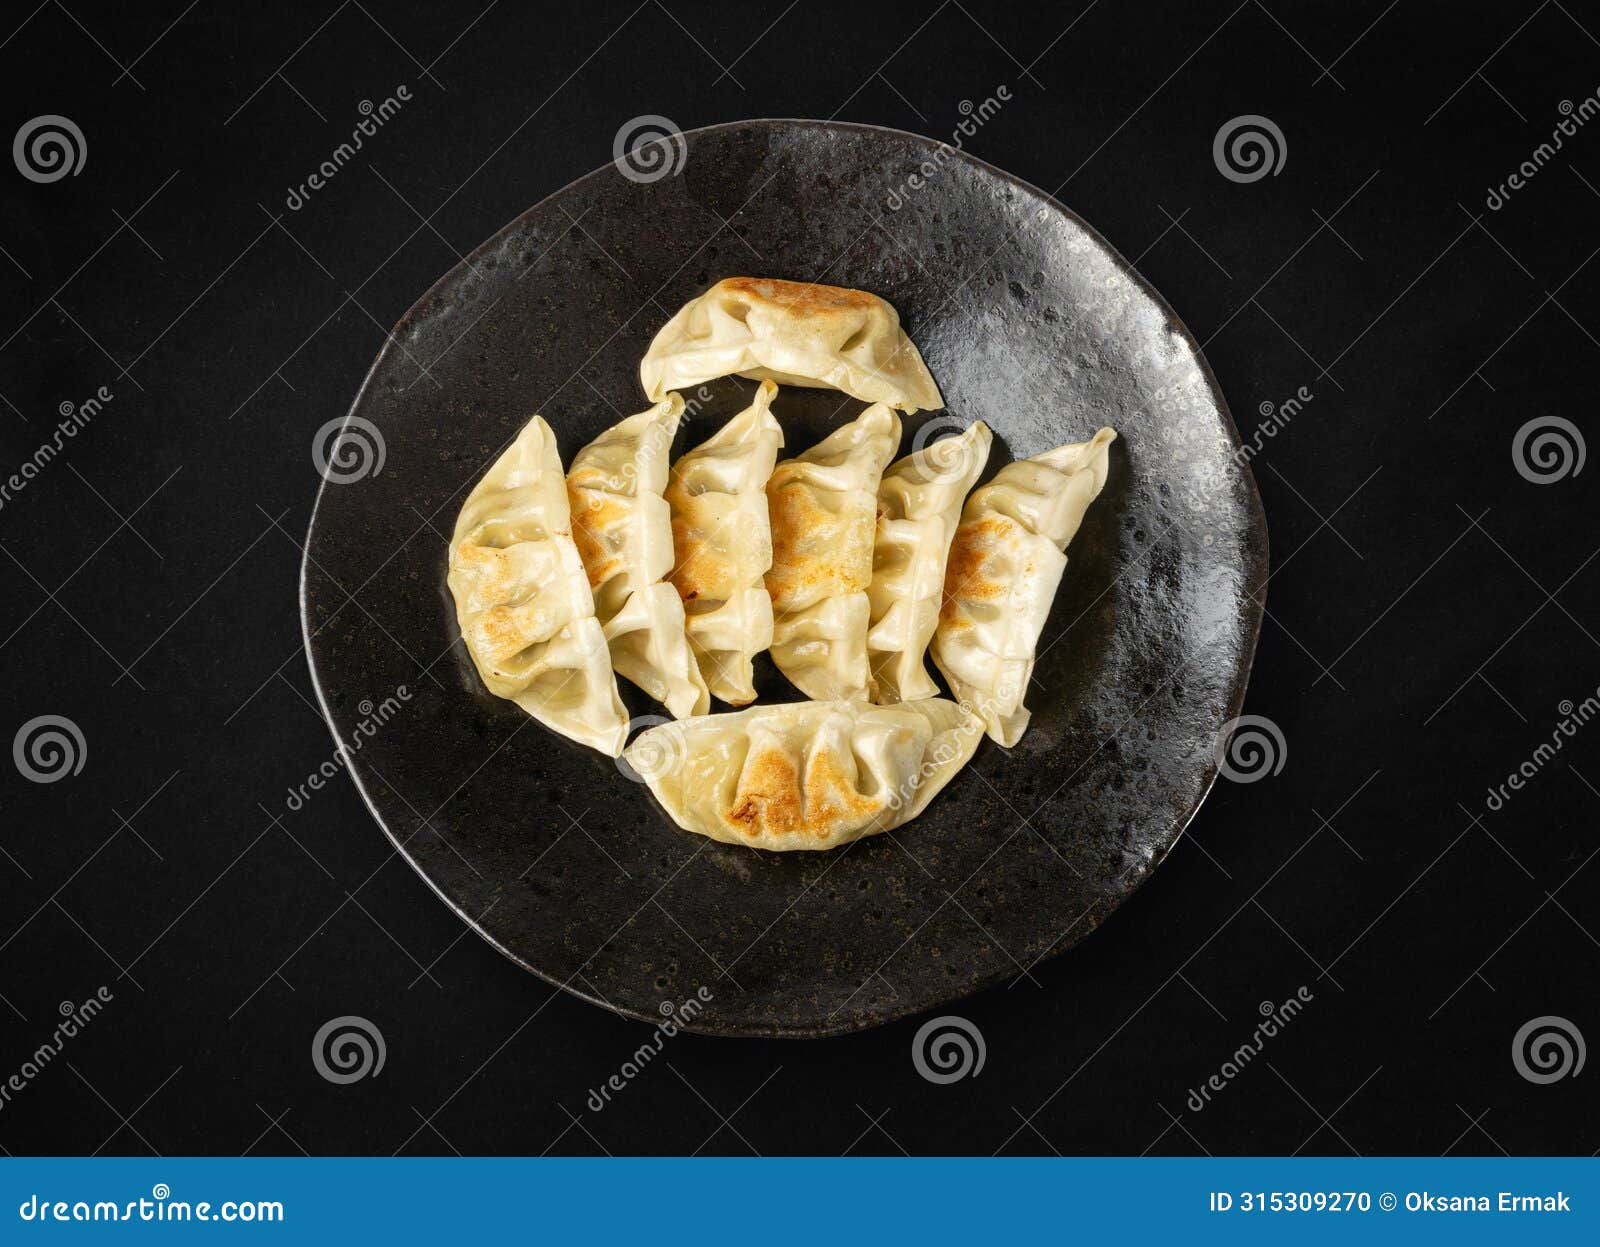 gyoza chinese dumplings top view, vegetable jiaozi, chicken momo pile, asian gyoza portion on black